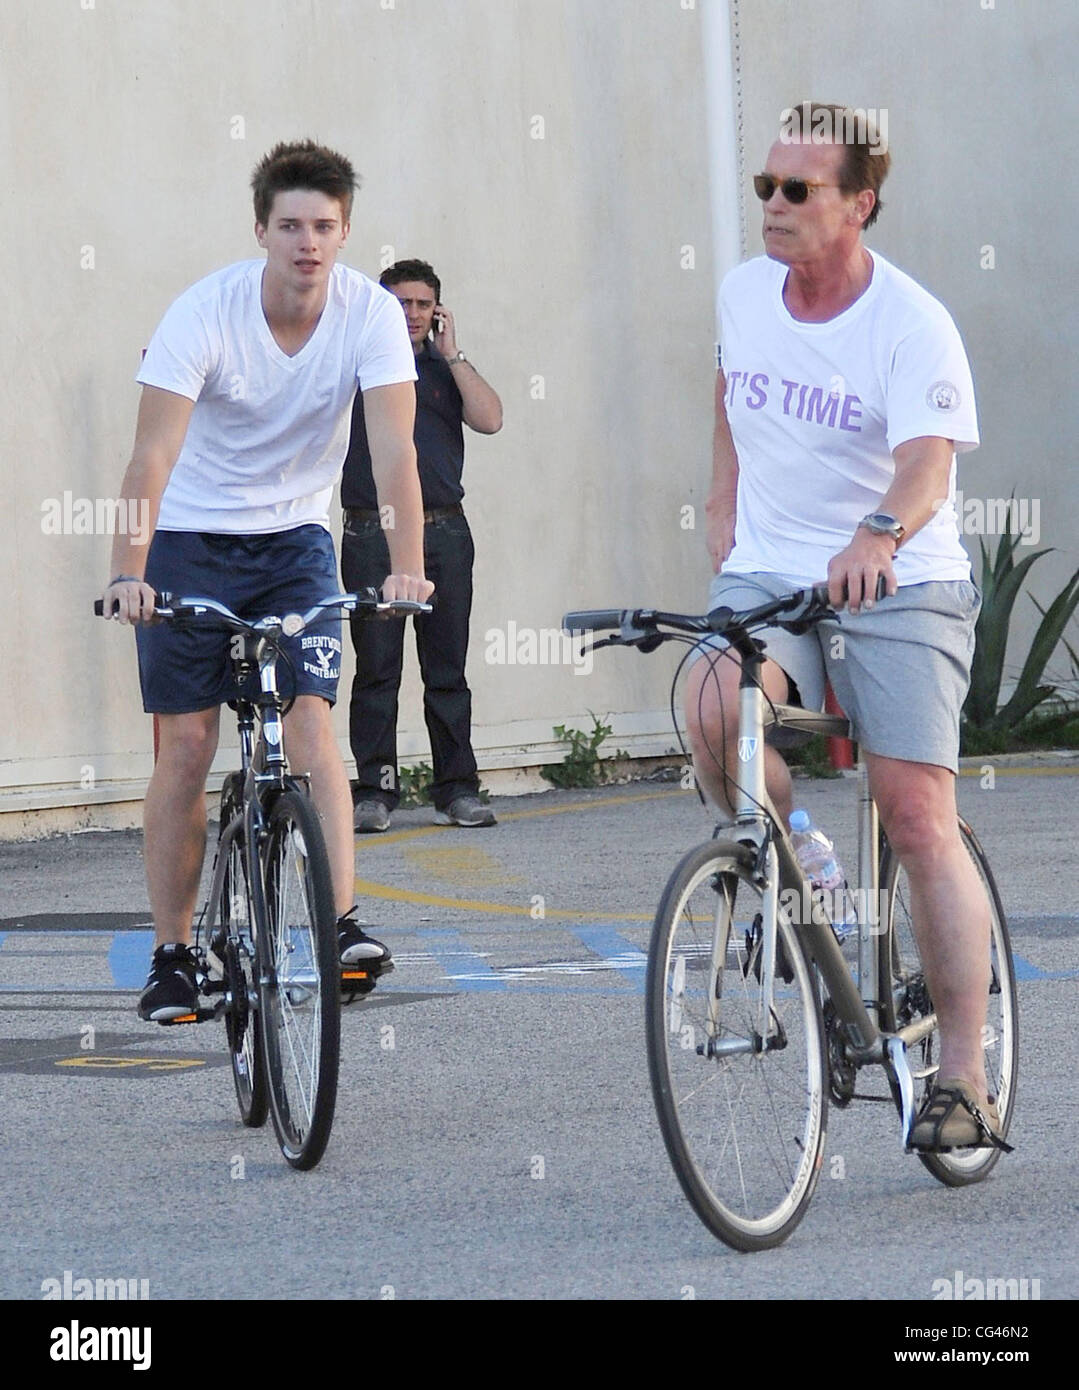 Arnold Schwarzenegger's Son, Patrick Is a Tom Ford Model